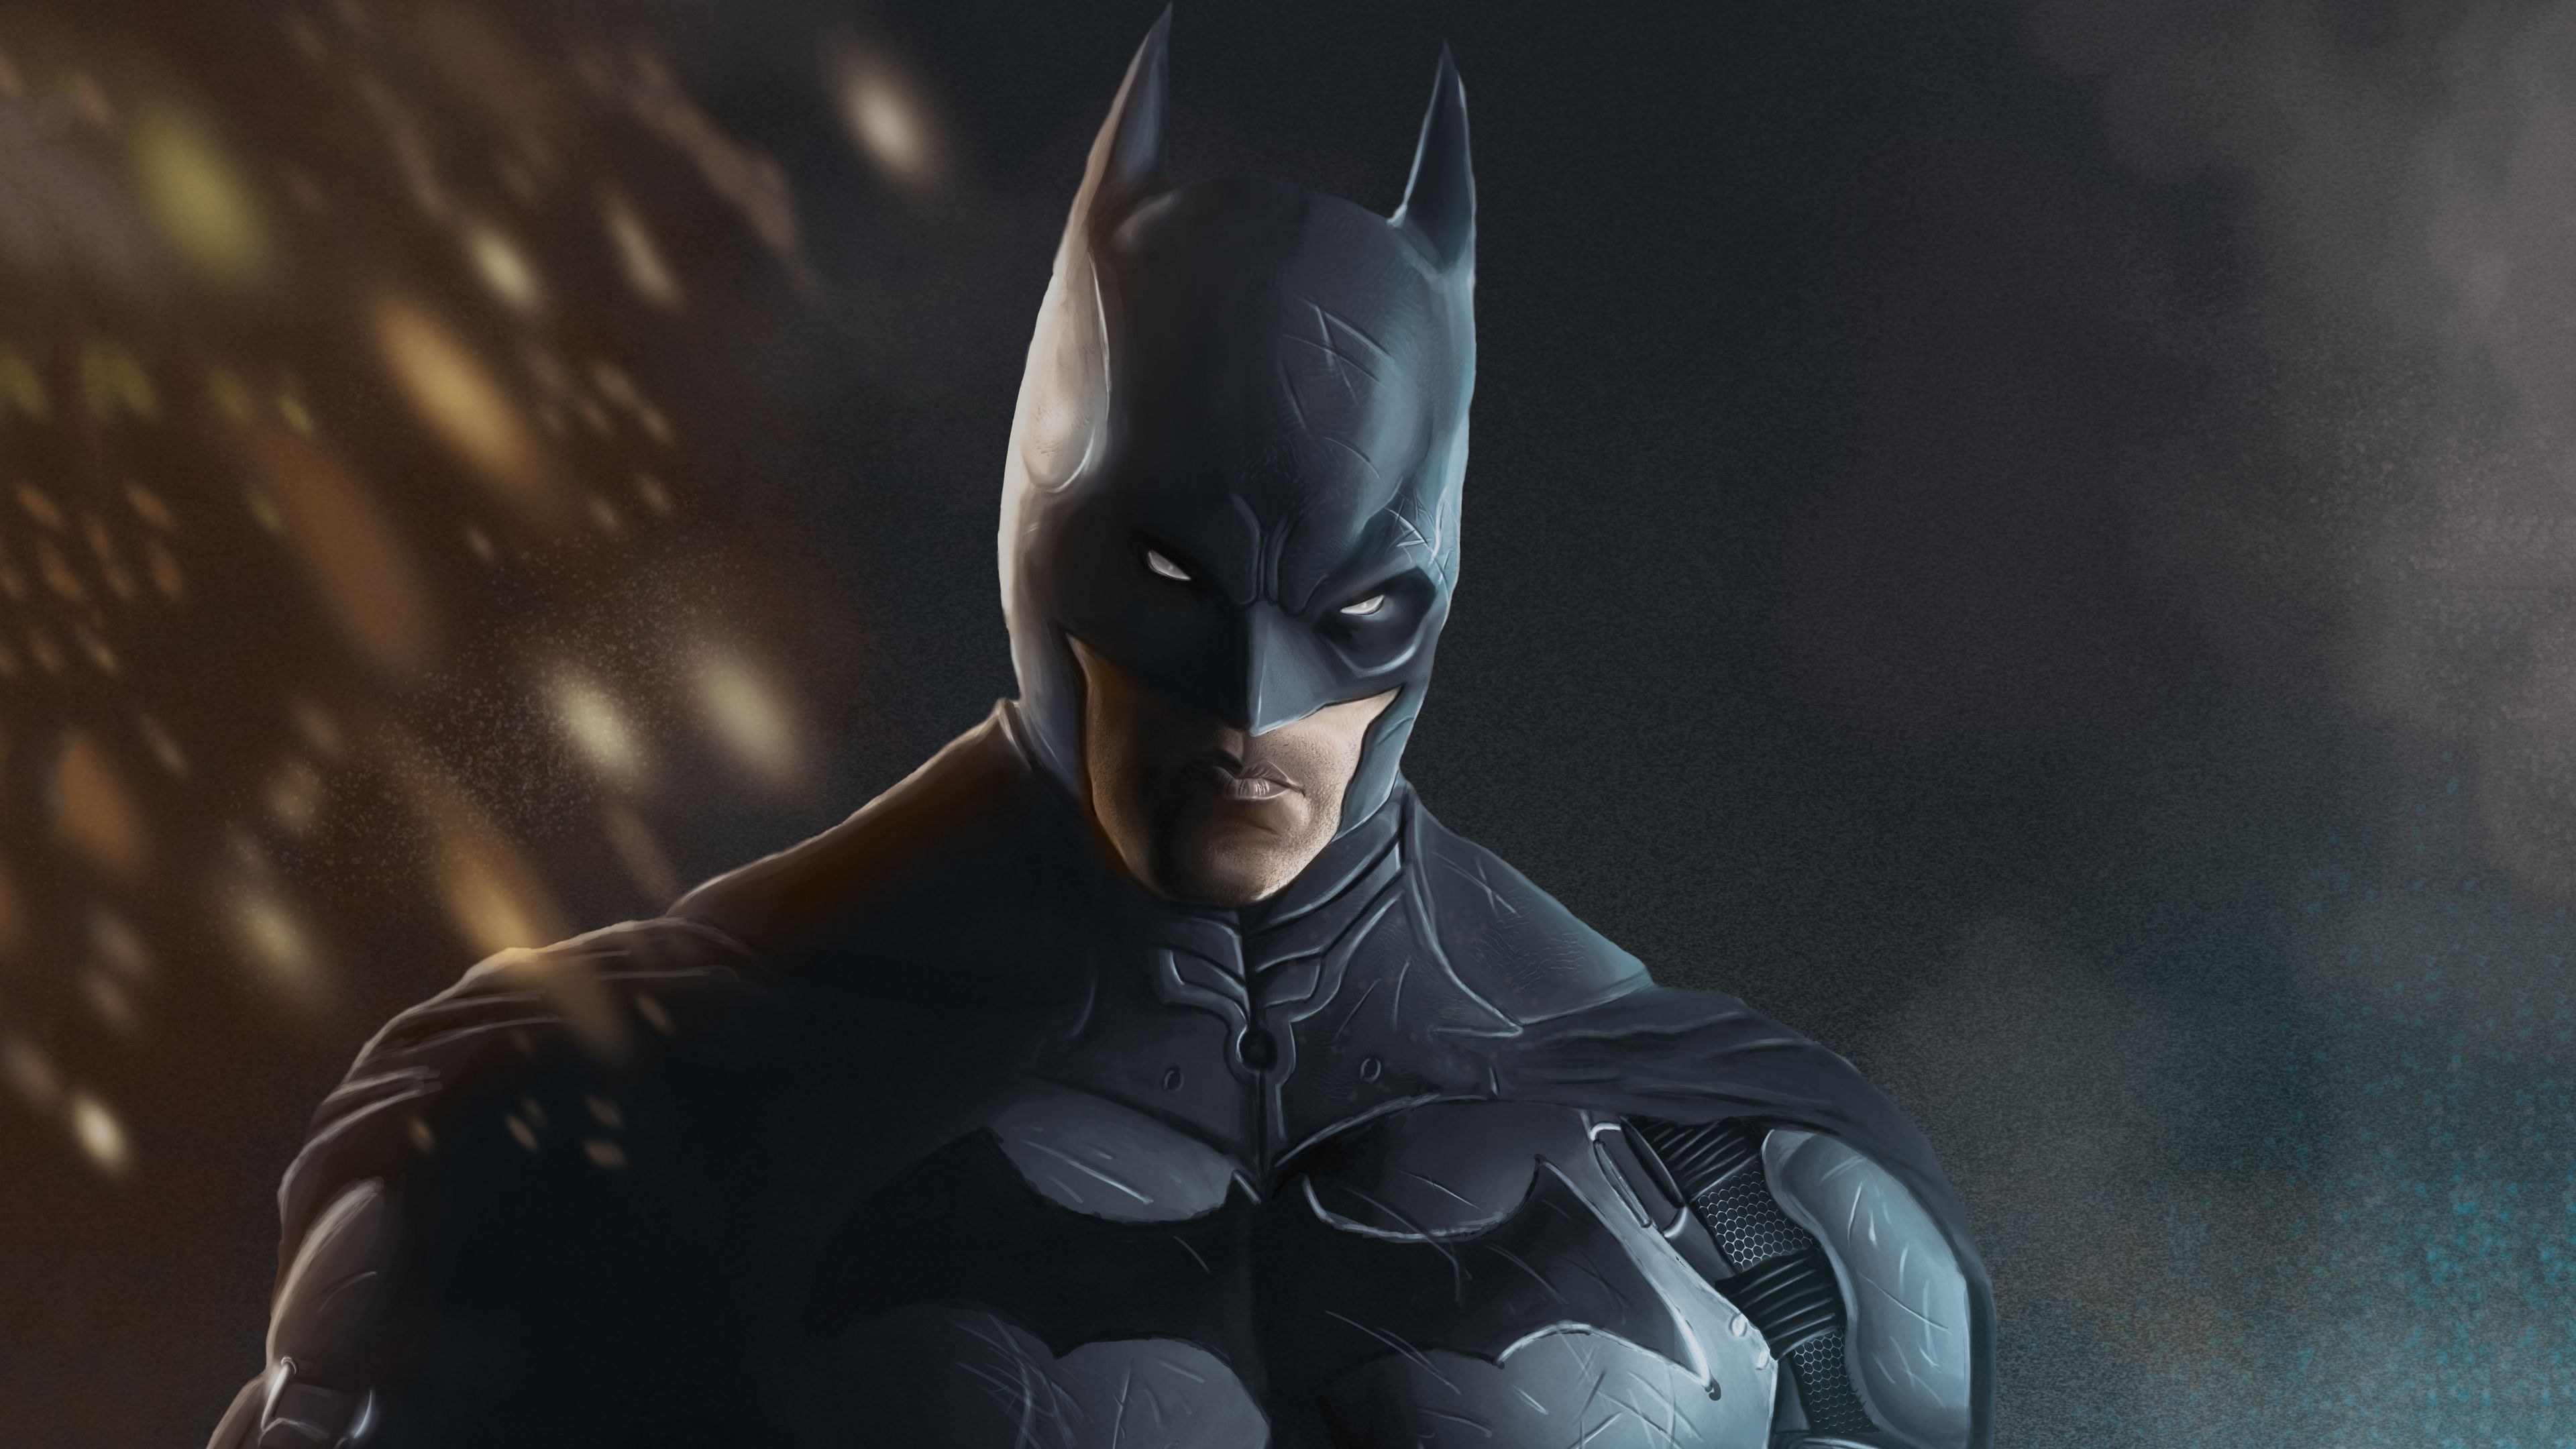 Batman Arkham Knight 5k Superheroes Wallpaper, Hd Wallpaper, Games Wallpaper, Batman Wallpaper, Batm. Batman Wallpaper, Batman Arkham Knight Wallpaper, Batman